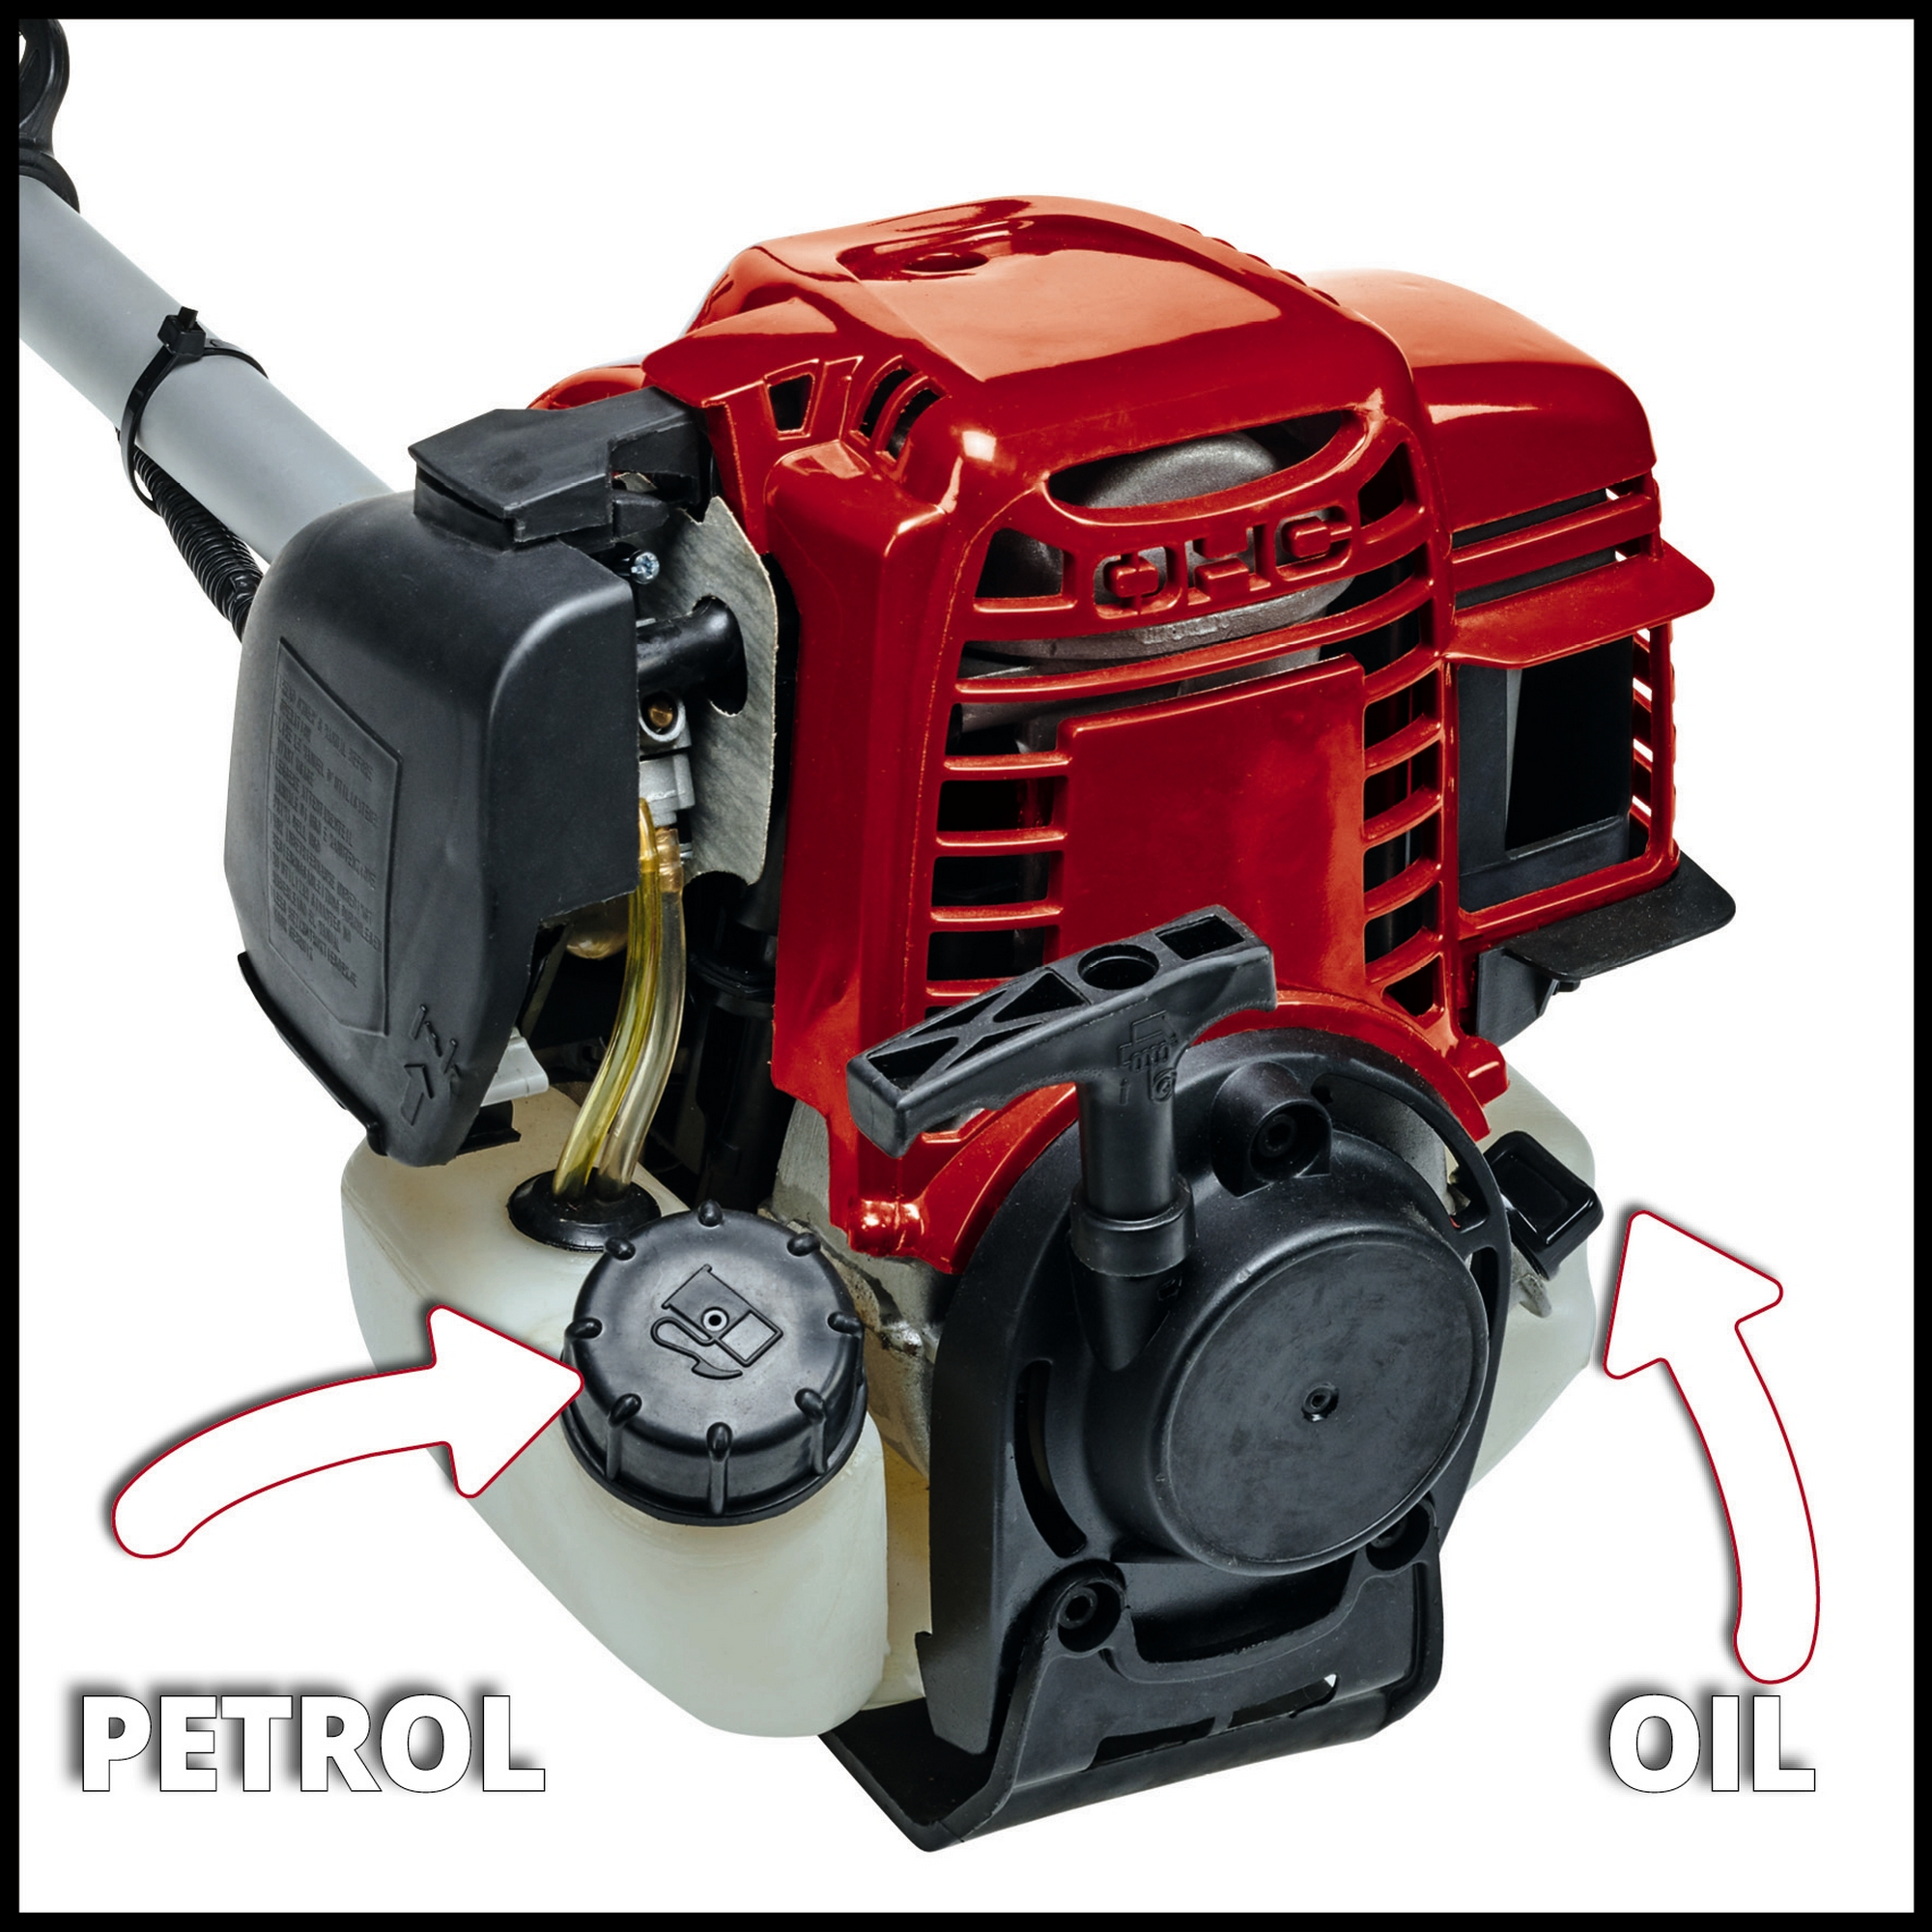 Benzin-Motorsense 'GC-BC 36-4 S' 1000 W 37.7 cm³ + product picture